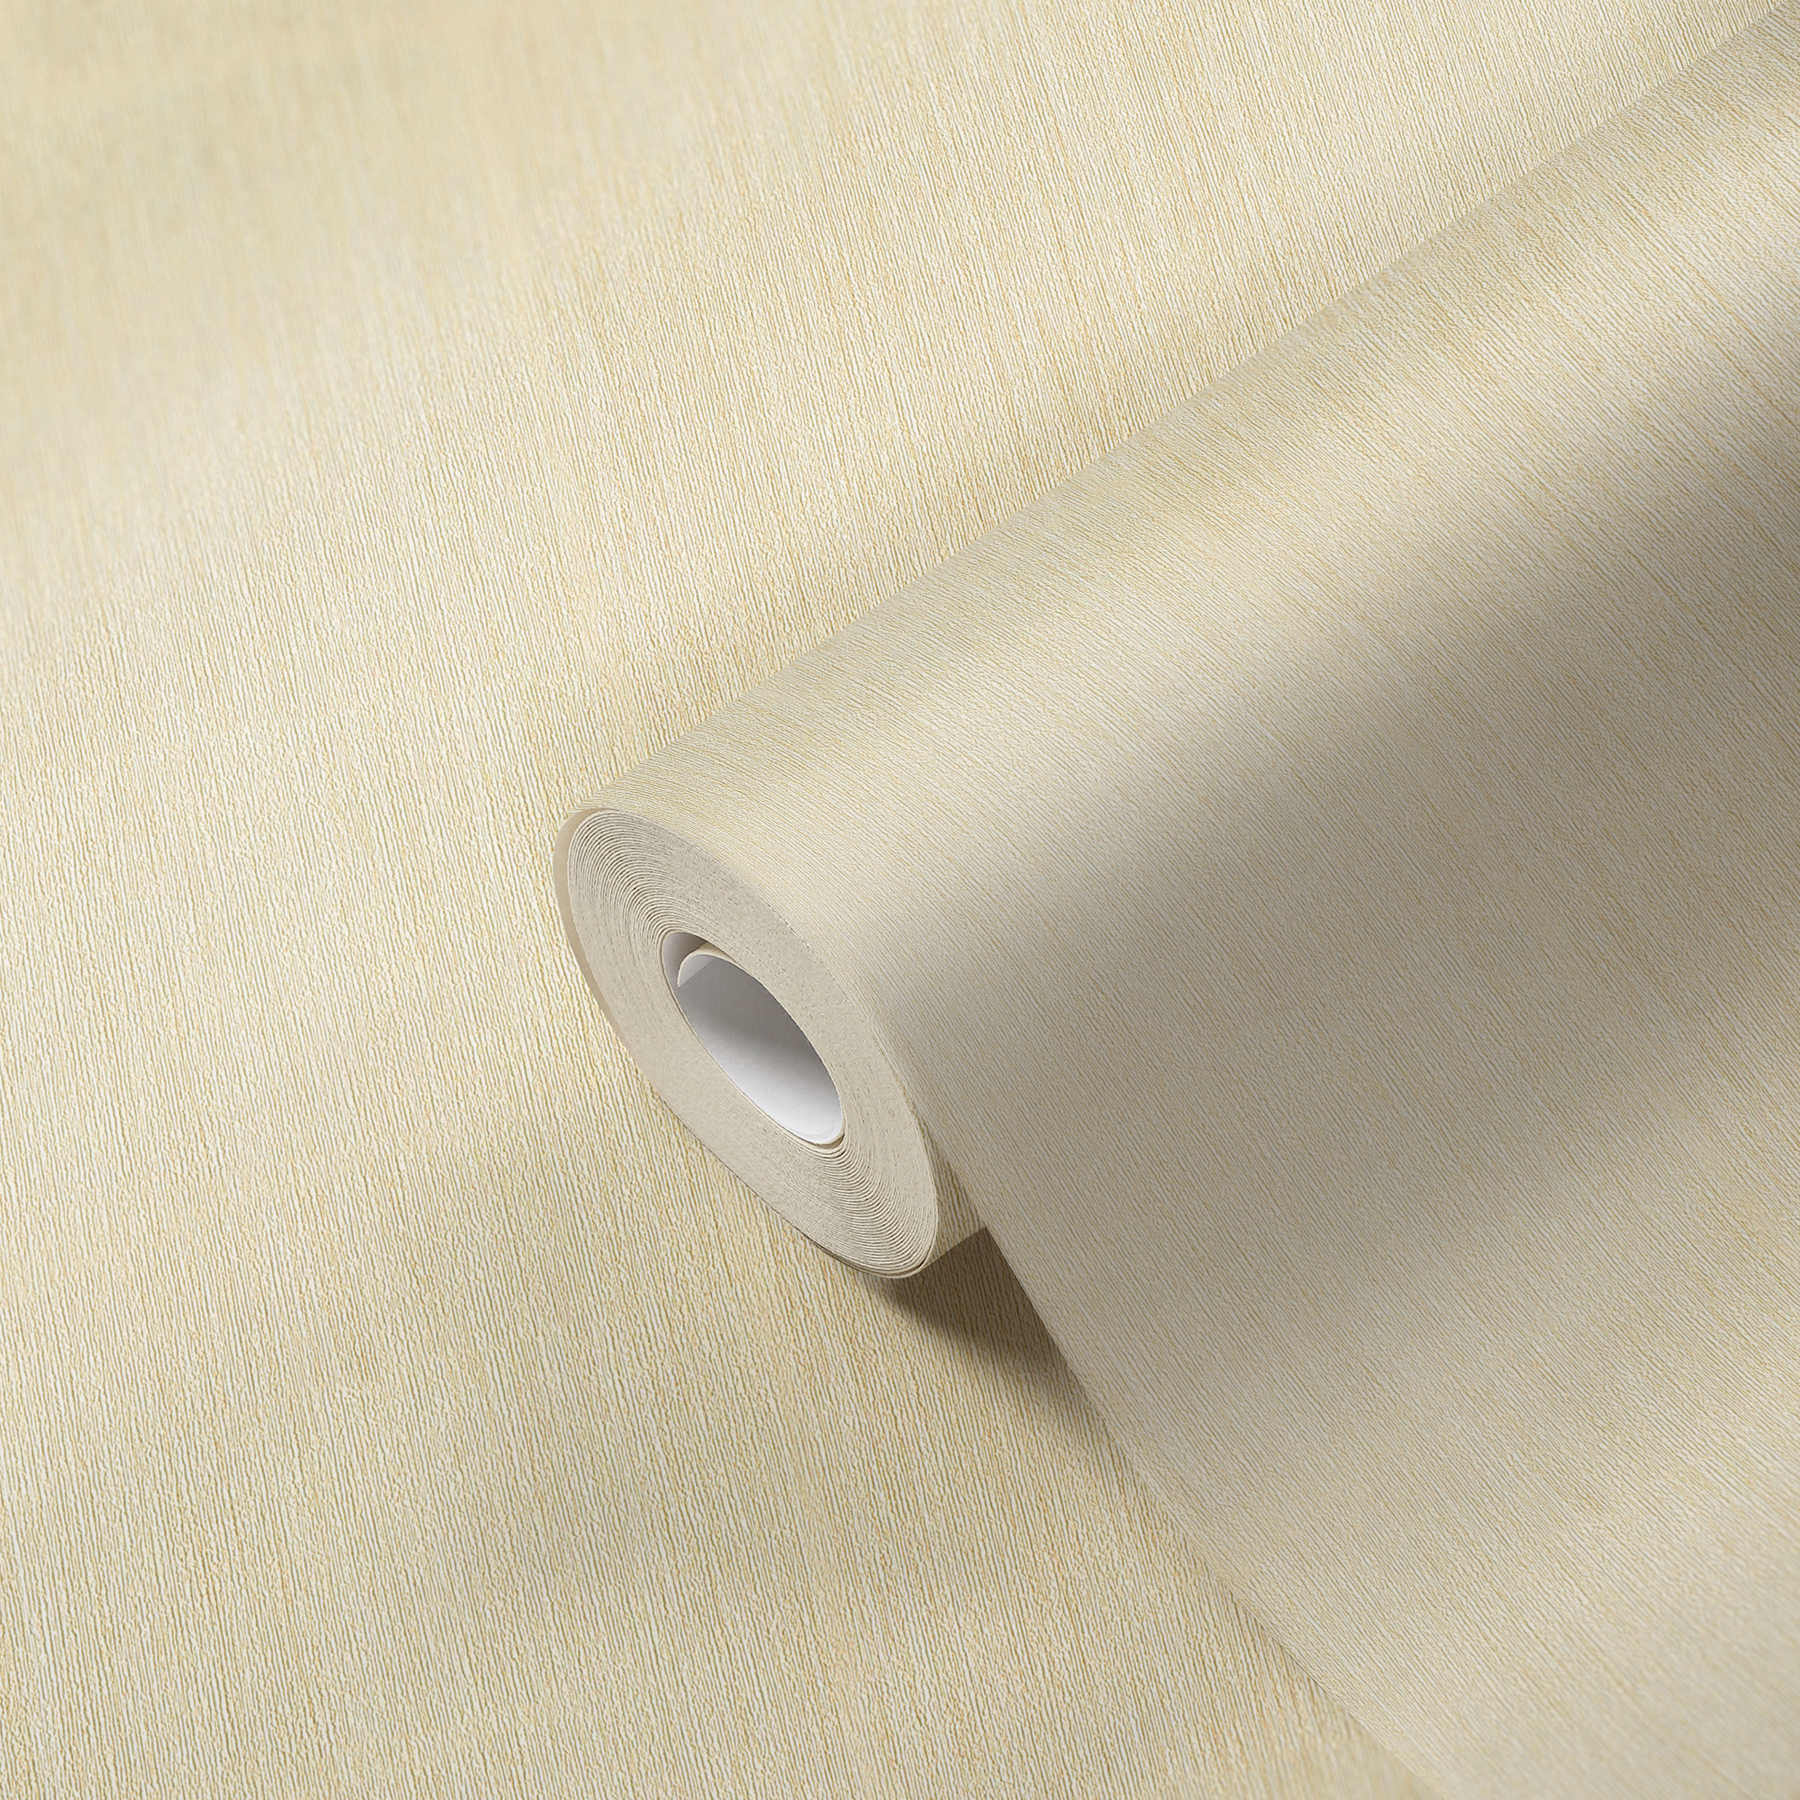             Light wallpaper cream mottled with textile texture
        